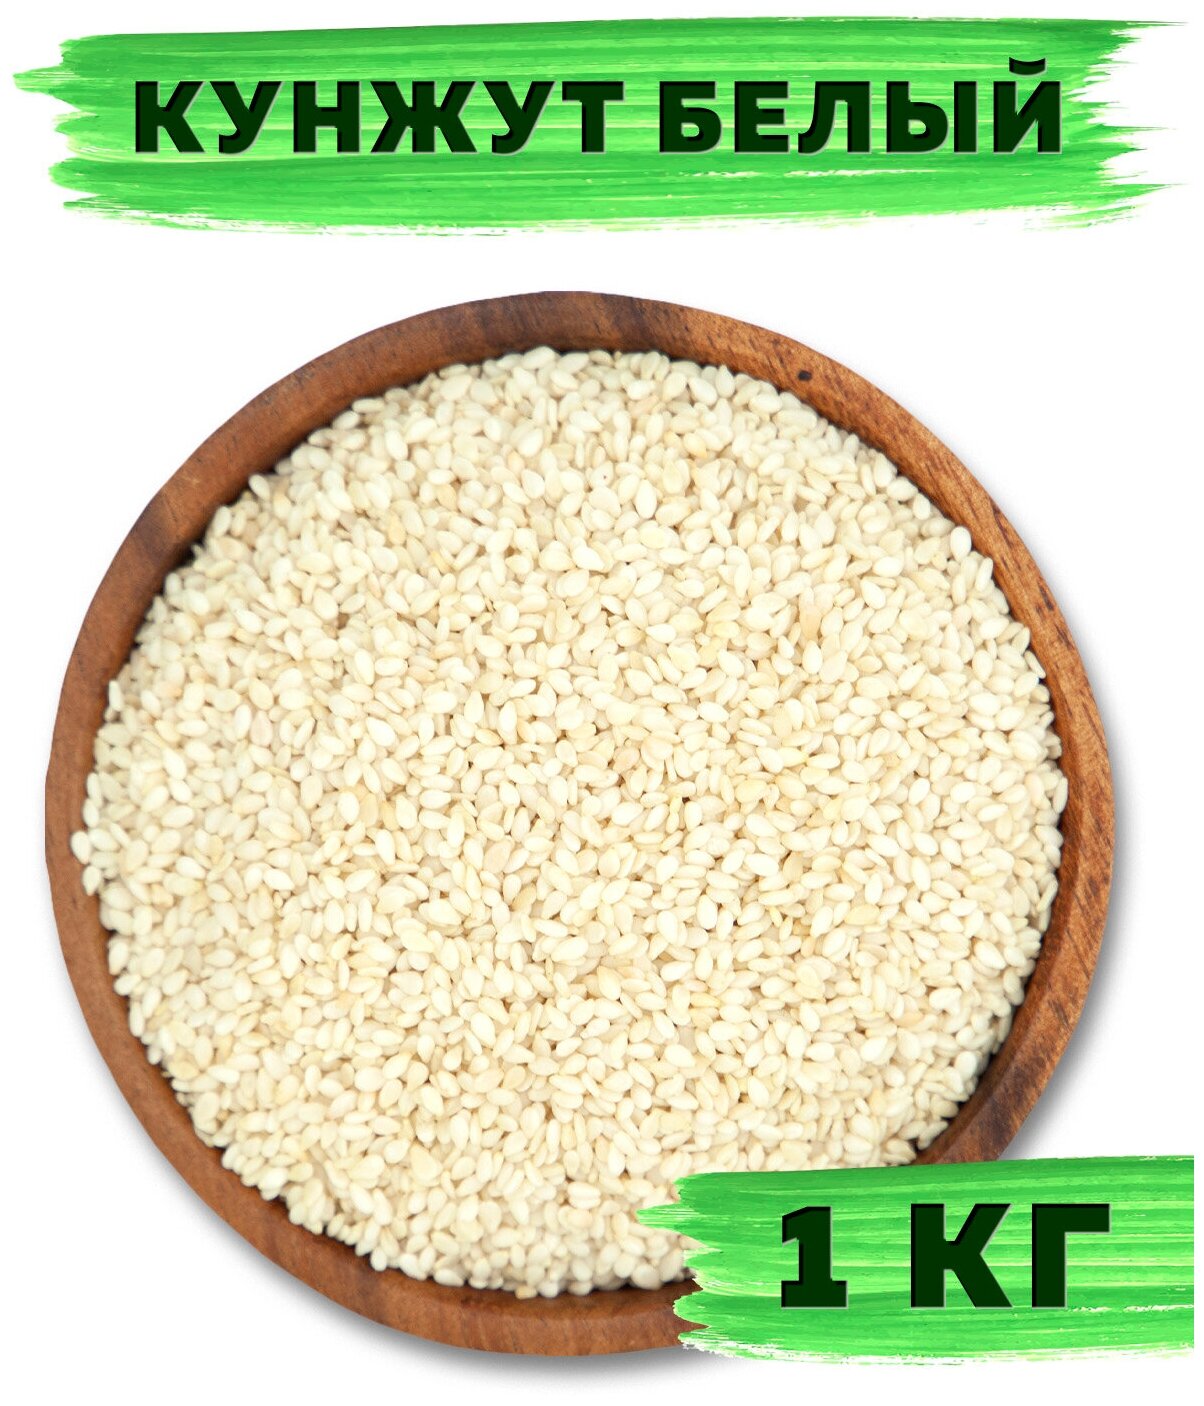 Кунжут белый натуральный семена кунжута 1 кг / 1000 грамм VegaGreen